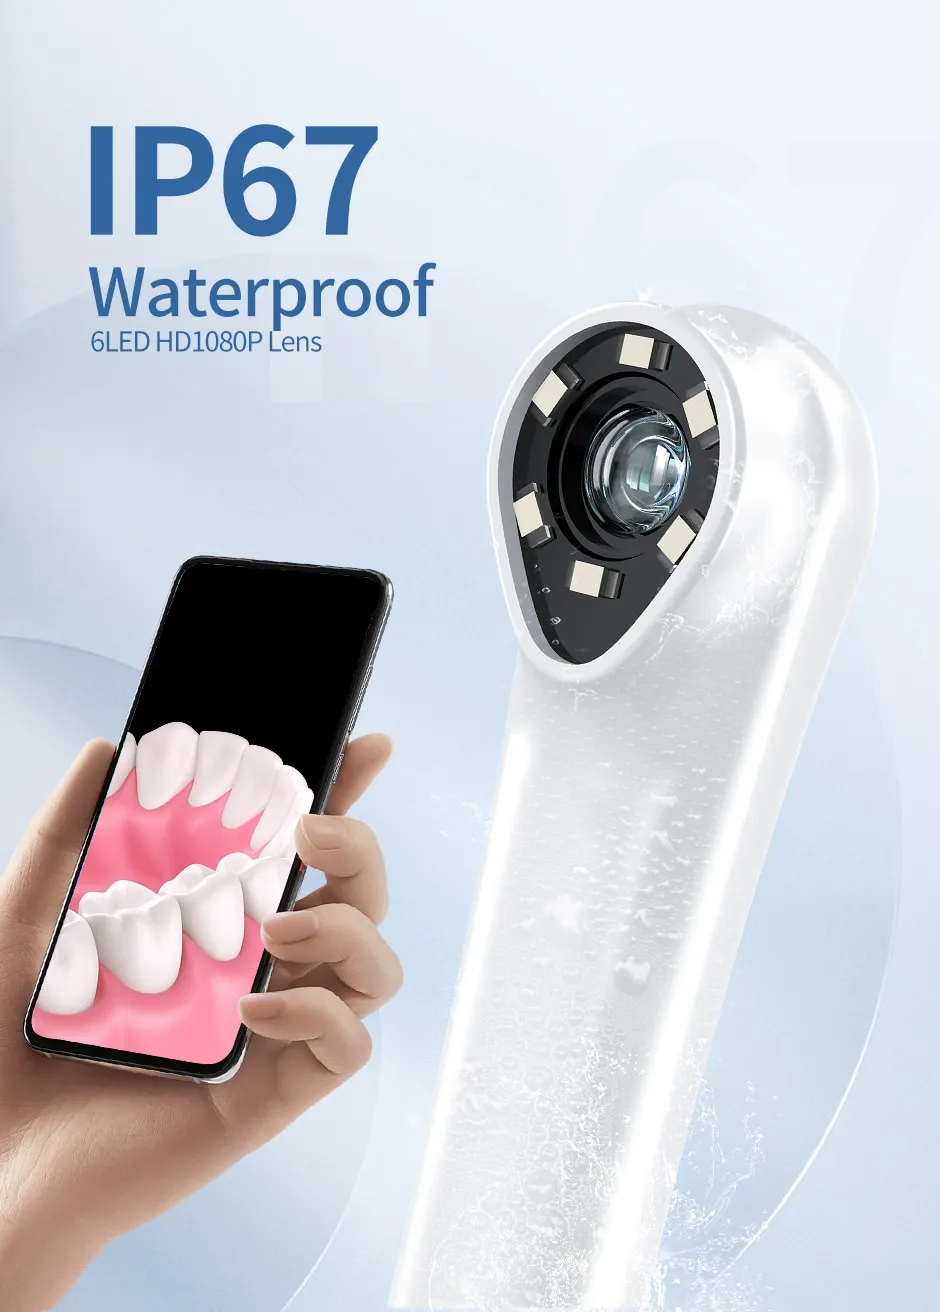 HD 1080P Intraoral Camera Mini 3 In1-Oral Examination Camera IP67 Waterproof Teeth Detecting Endoscope Cameras -Endoscope Cameras For Dentist Price In Pakistan